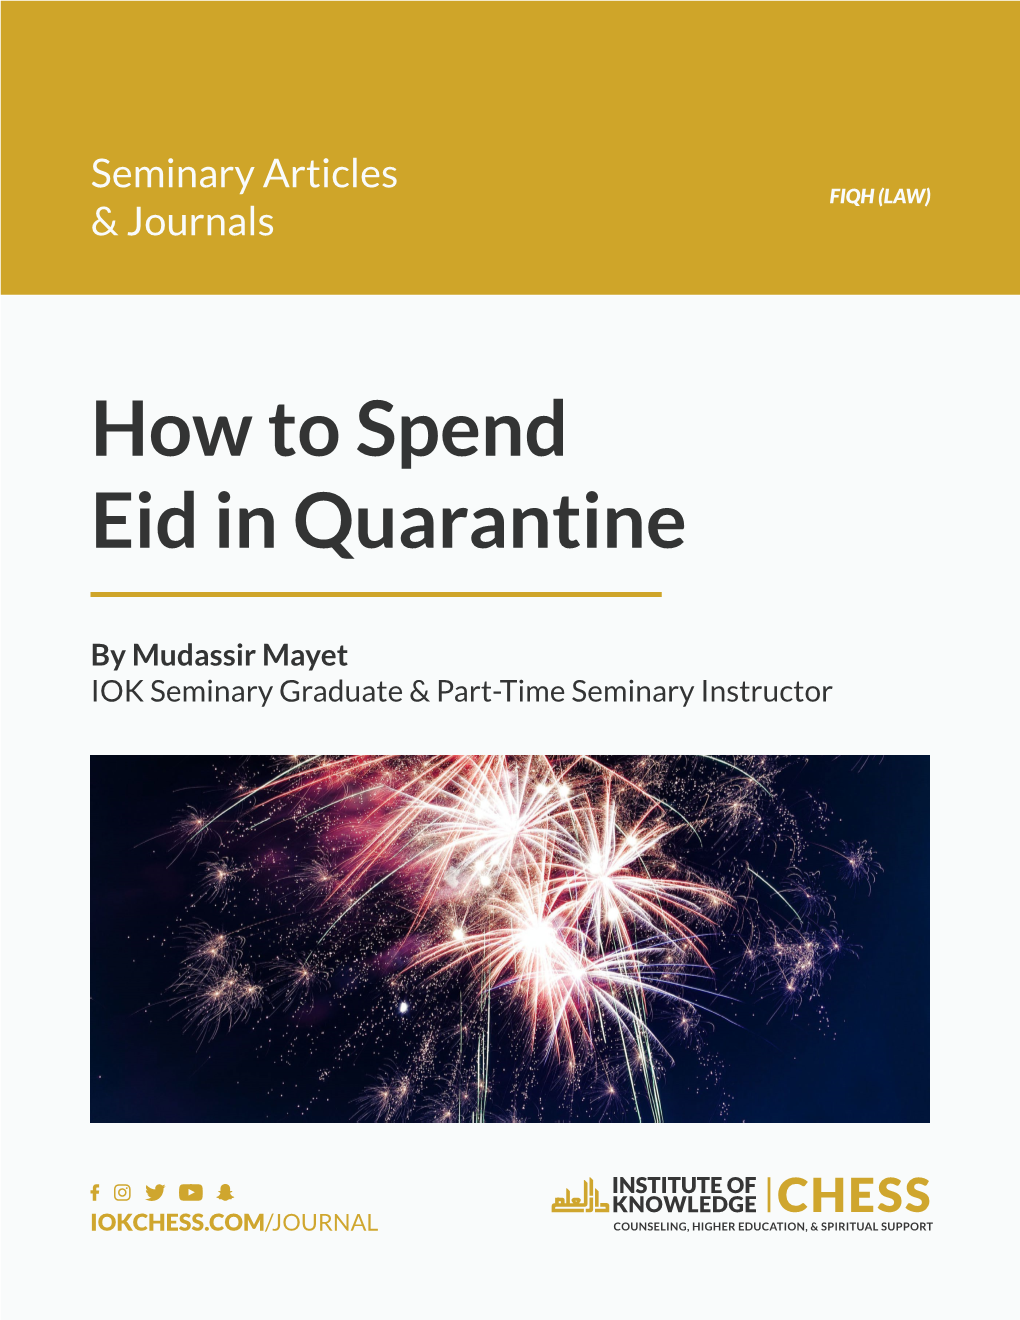 How to Spend Eid in Quarantine